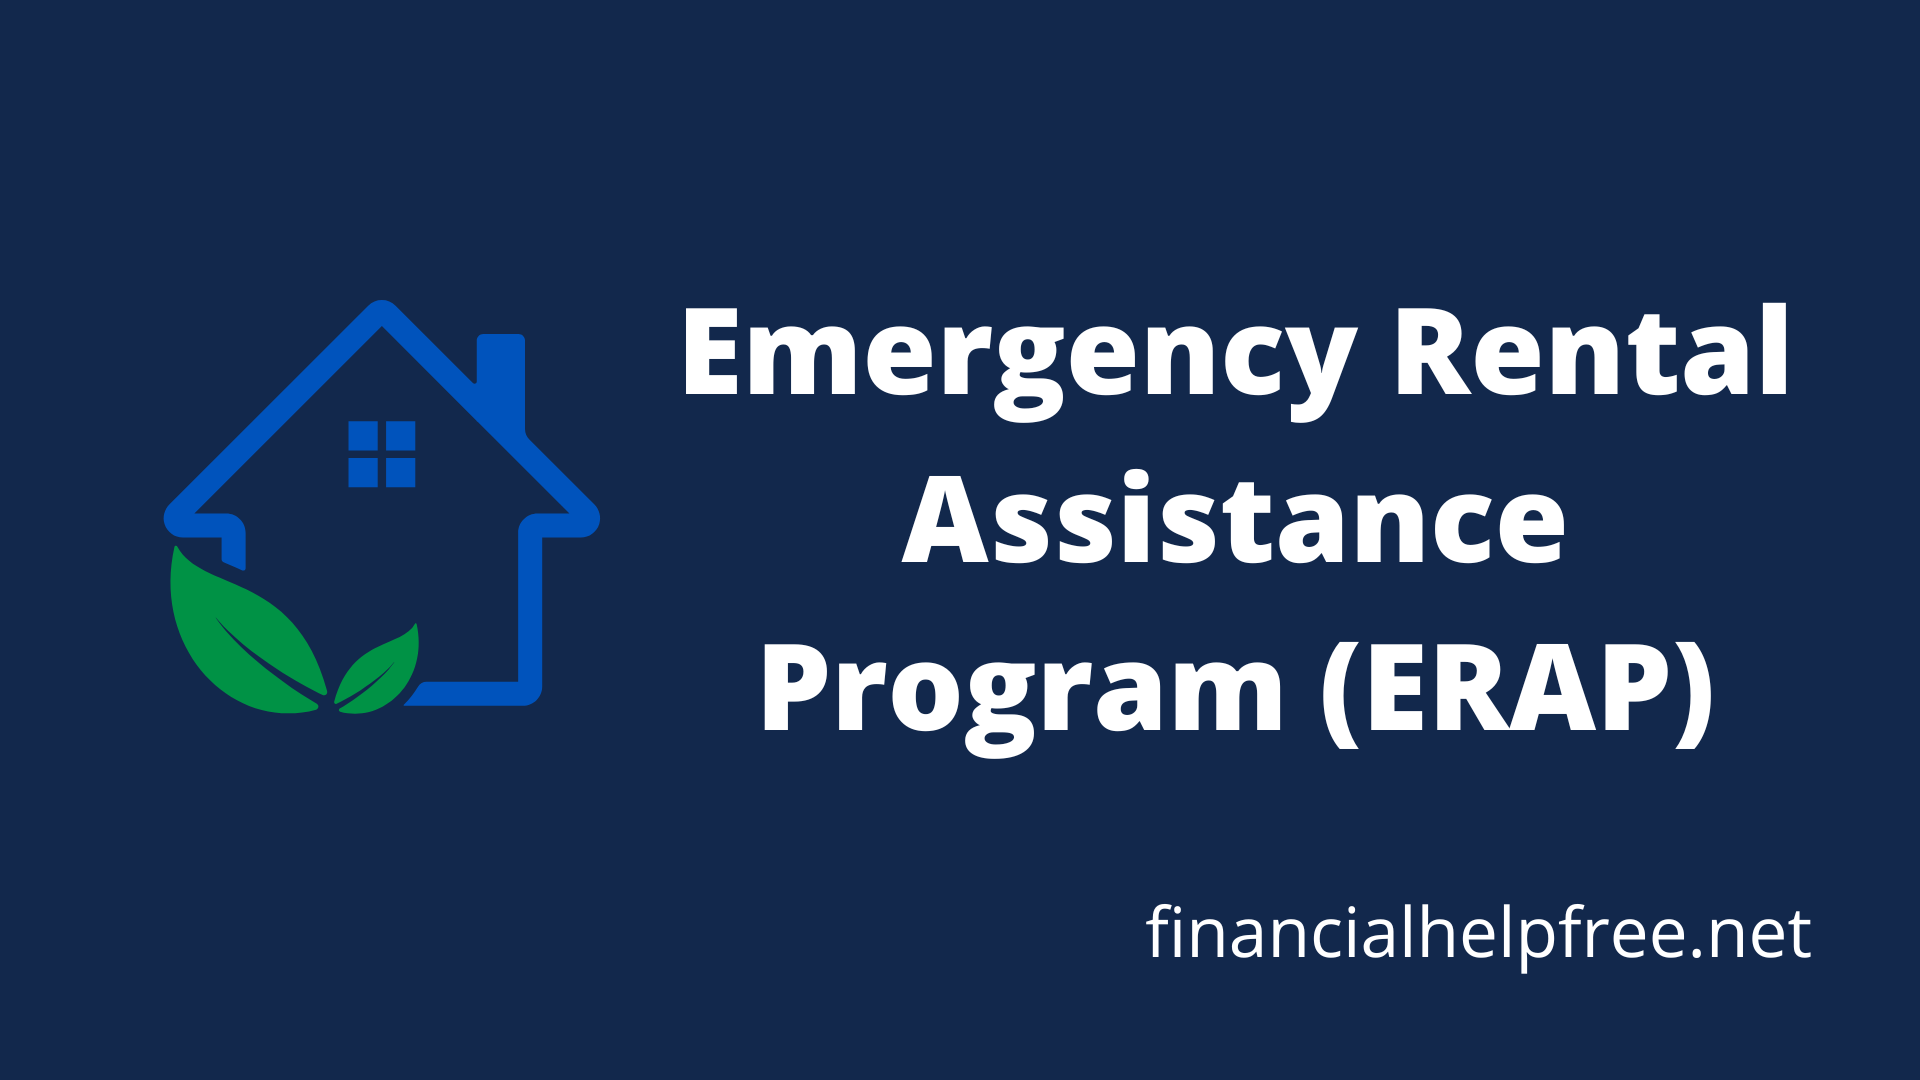 Find Emergency Rental Assistance Programs Near You